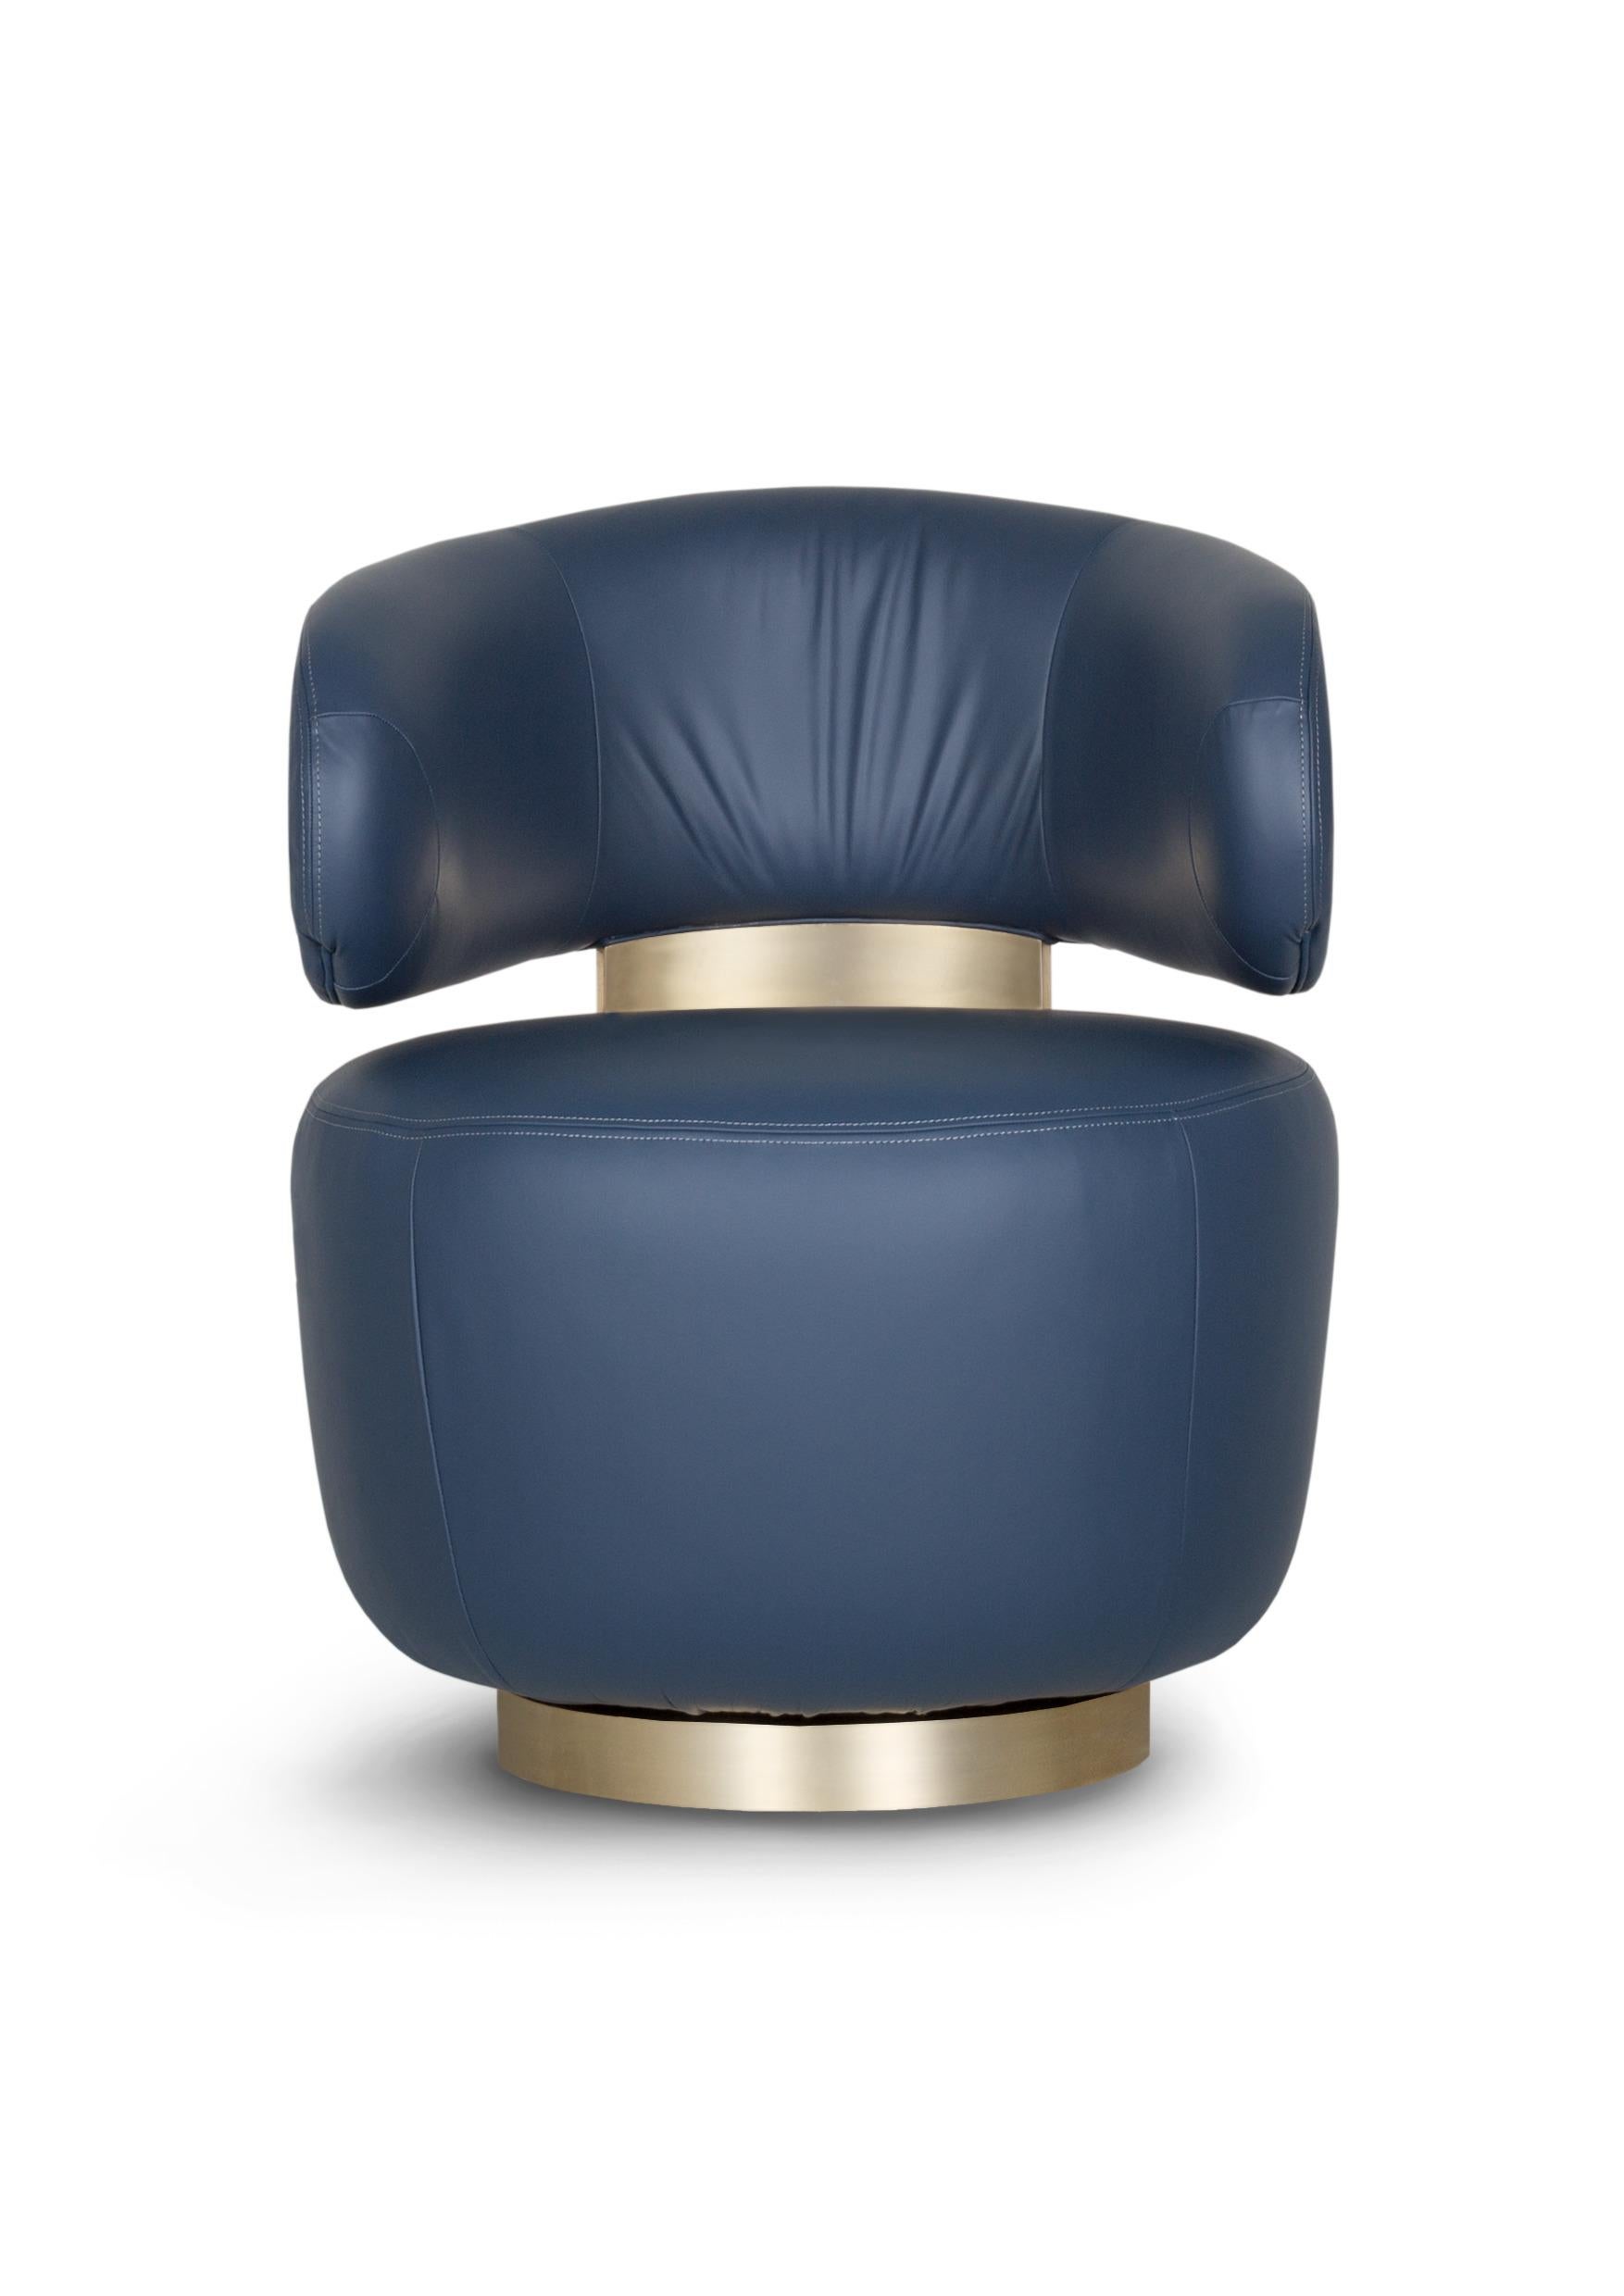 Contemporary Modern Caju Lounge Chair, Swivel Italian Leather, Handmade Portugal Greenapple For Sale